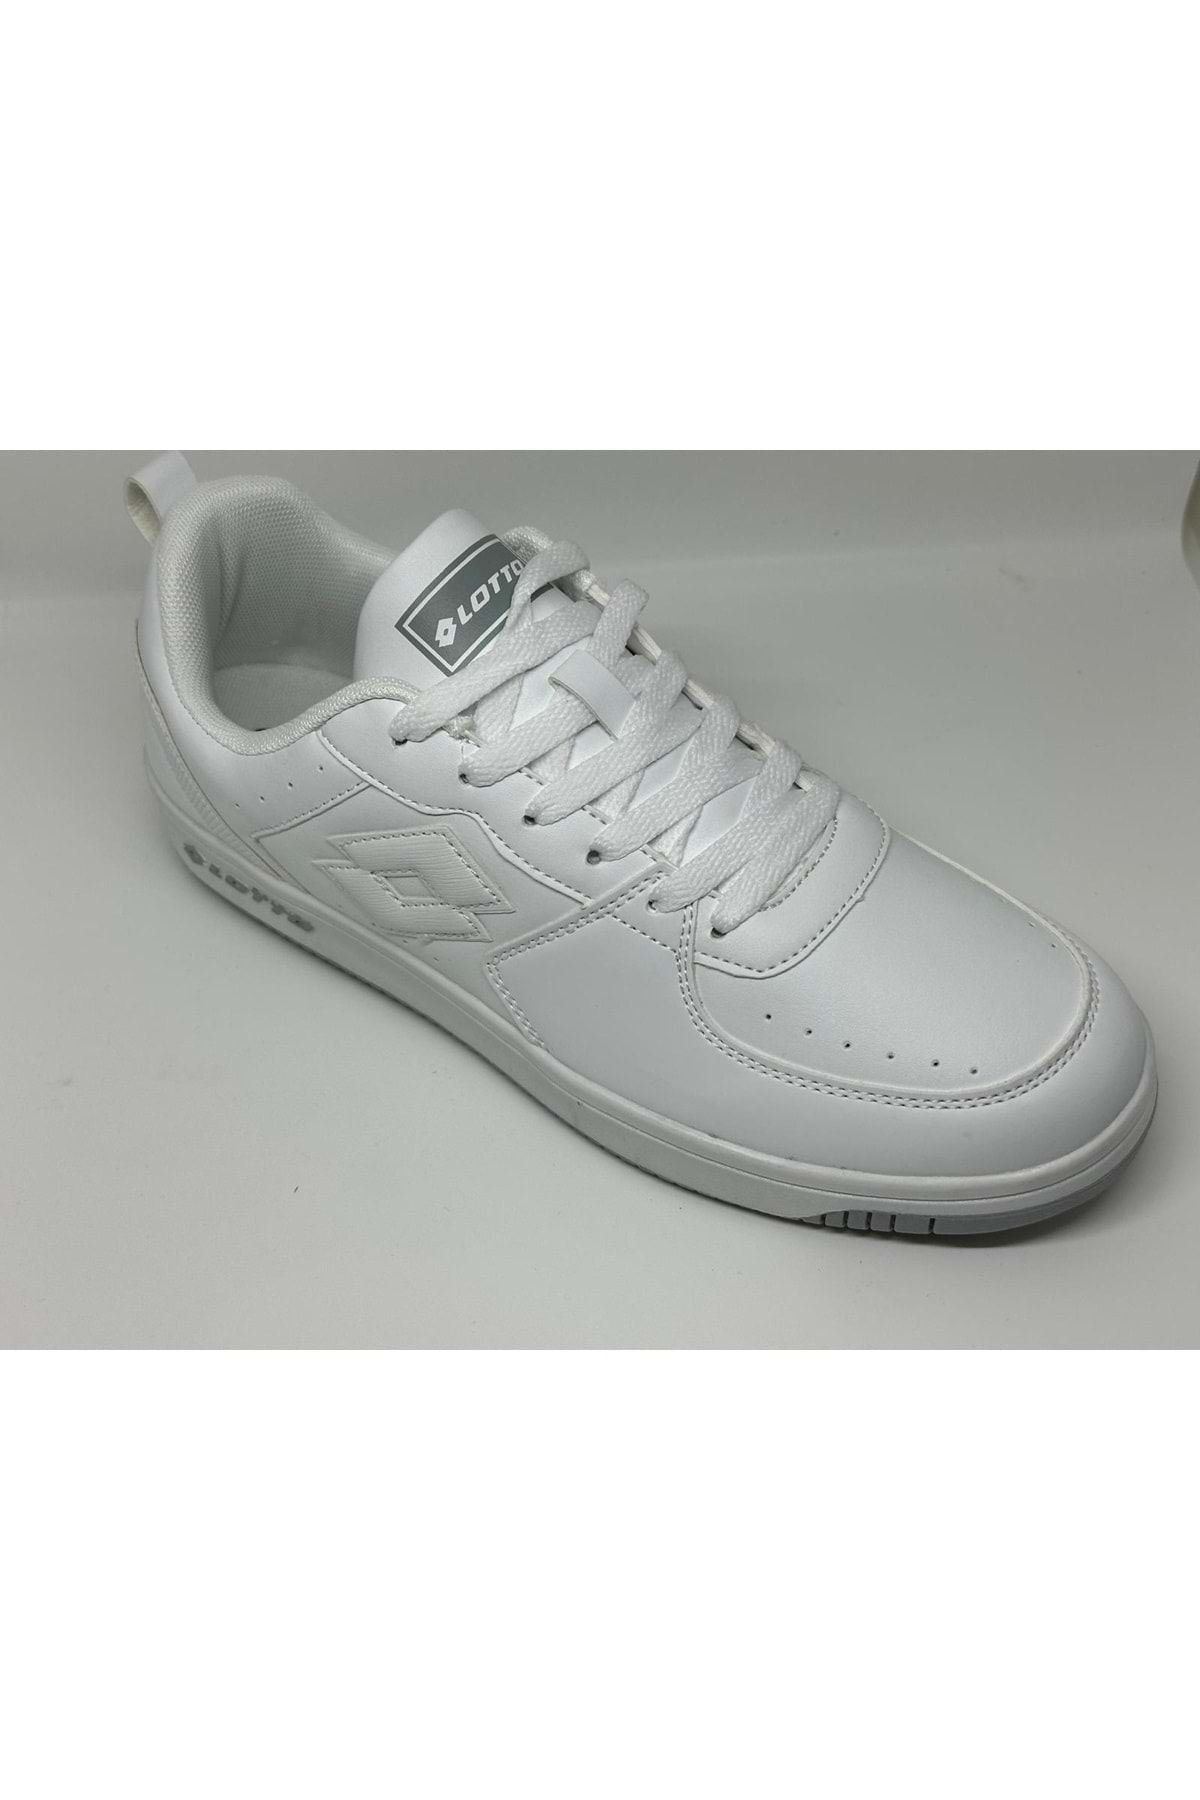 Buy Lotto Men Wings Ii White/Navy Running Shoes-6 UK (40 EU) (7 US)  (AV5066-141) at Amazon.in